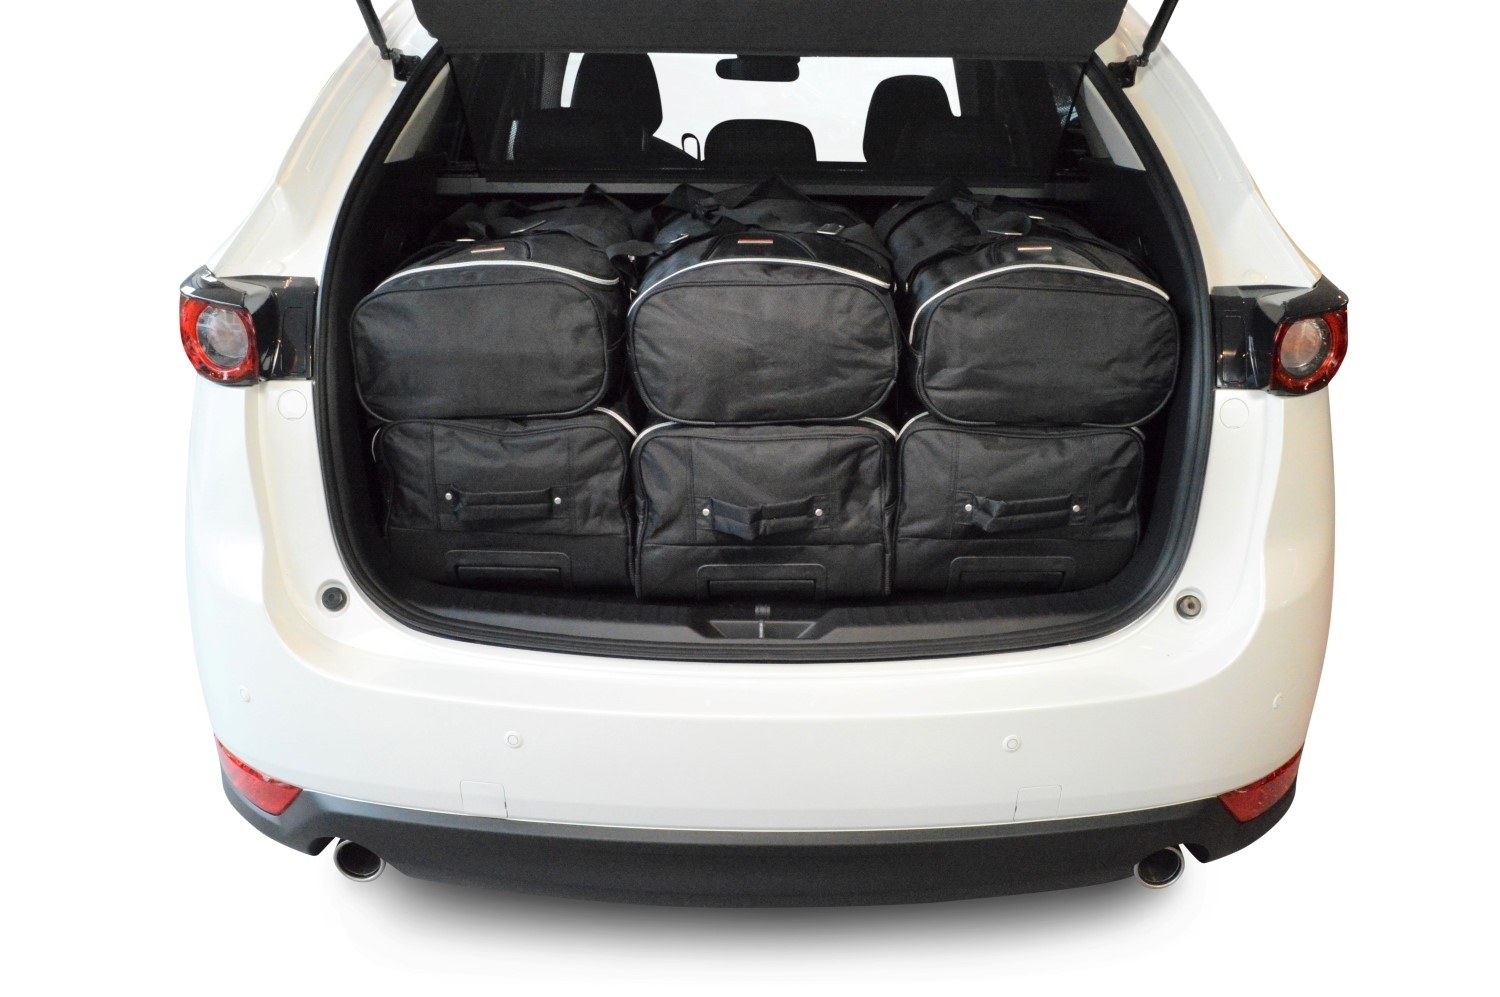 Travel bags CX-5 Mazda (KF)